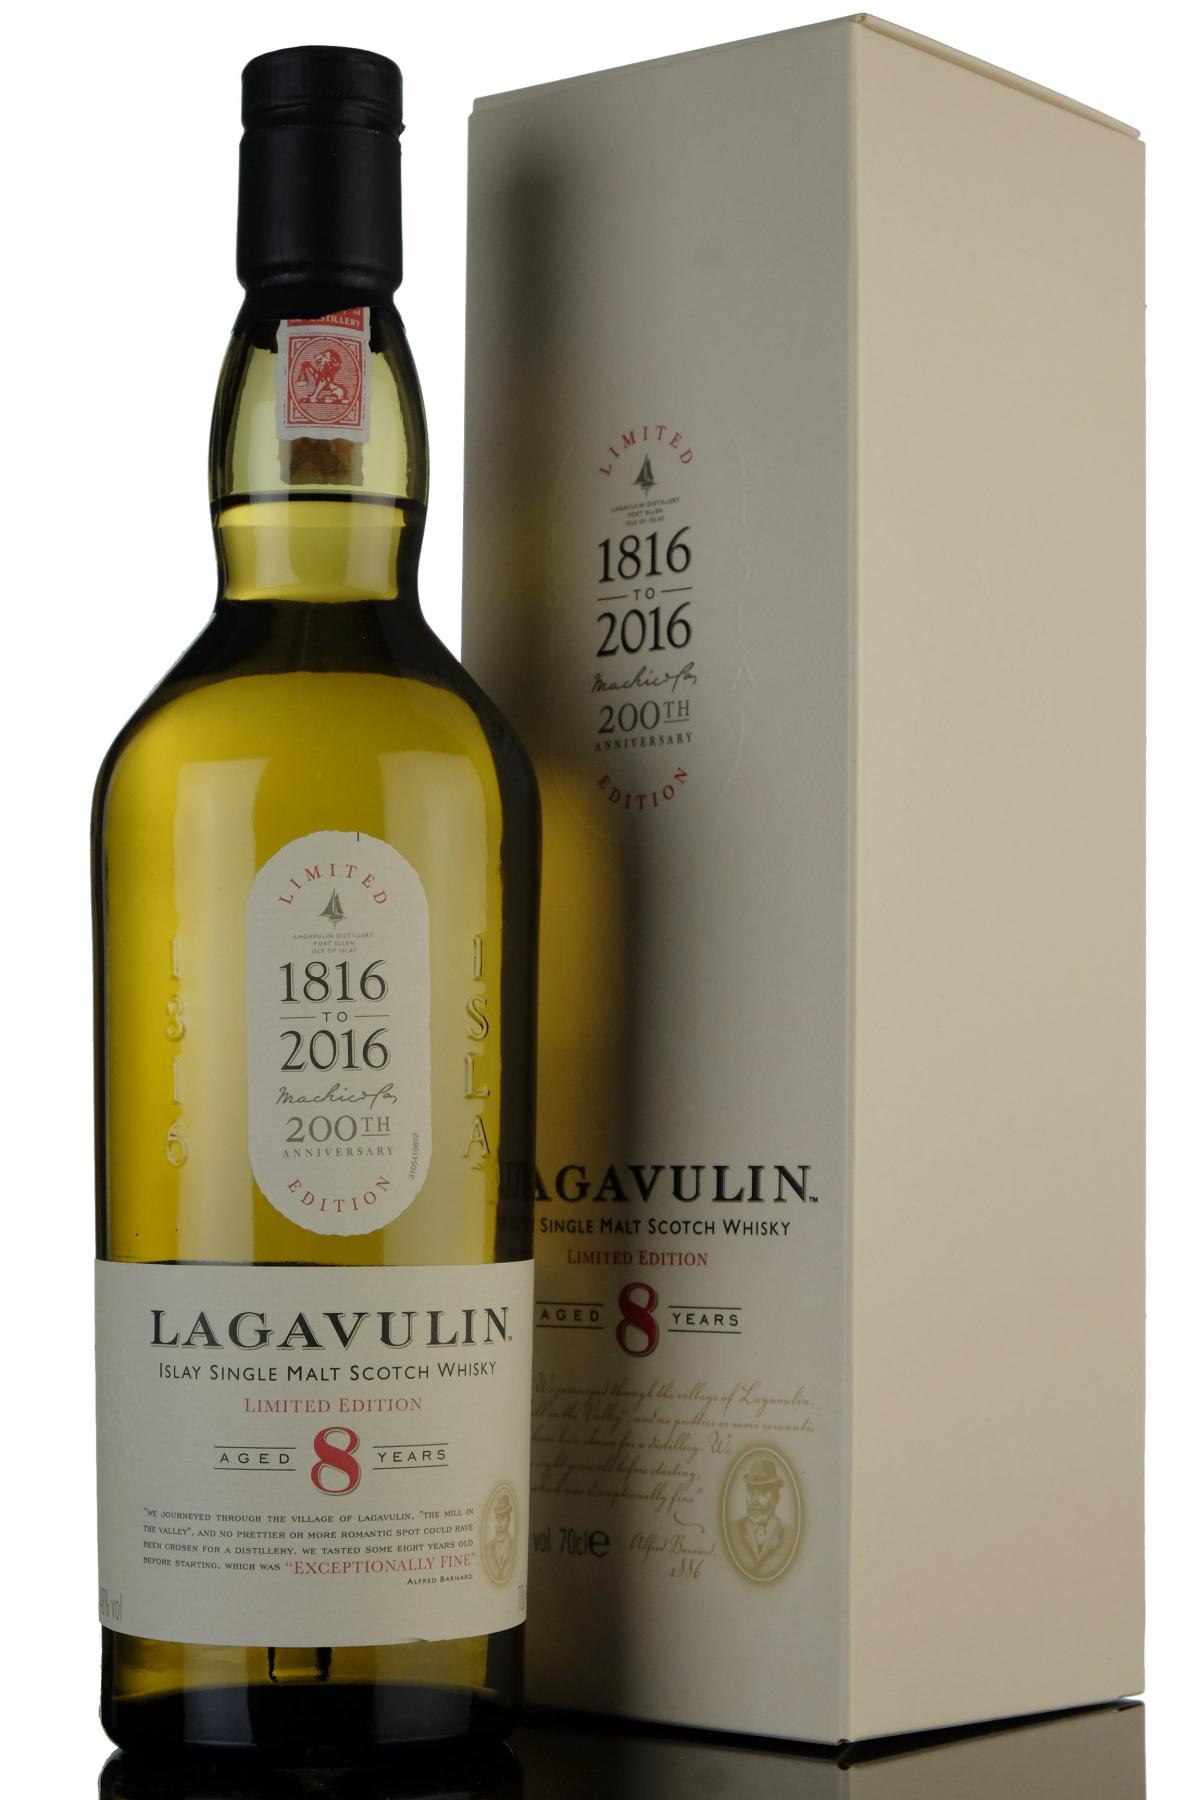 Lagavulin 8 Year Old - 200th Anniversary